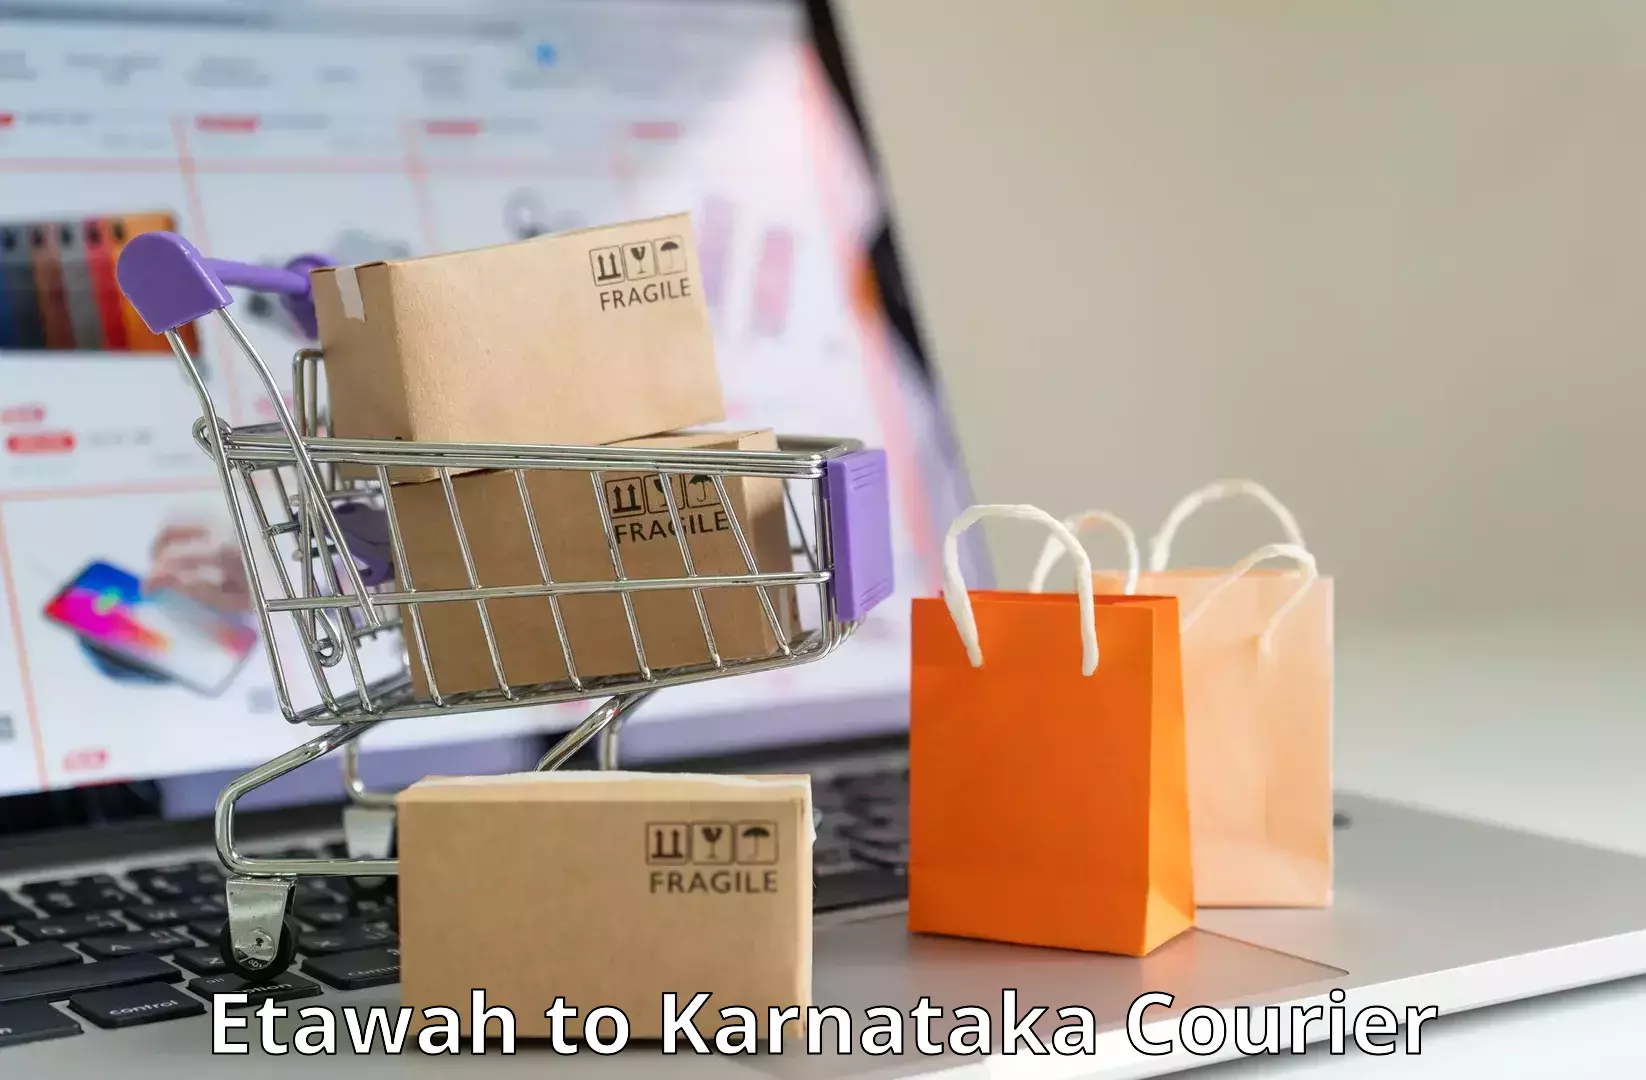 Expedited shipping solutions Etawah to Bangalore